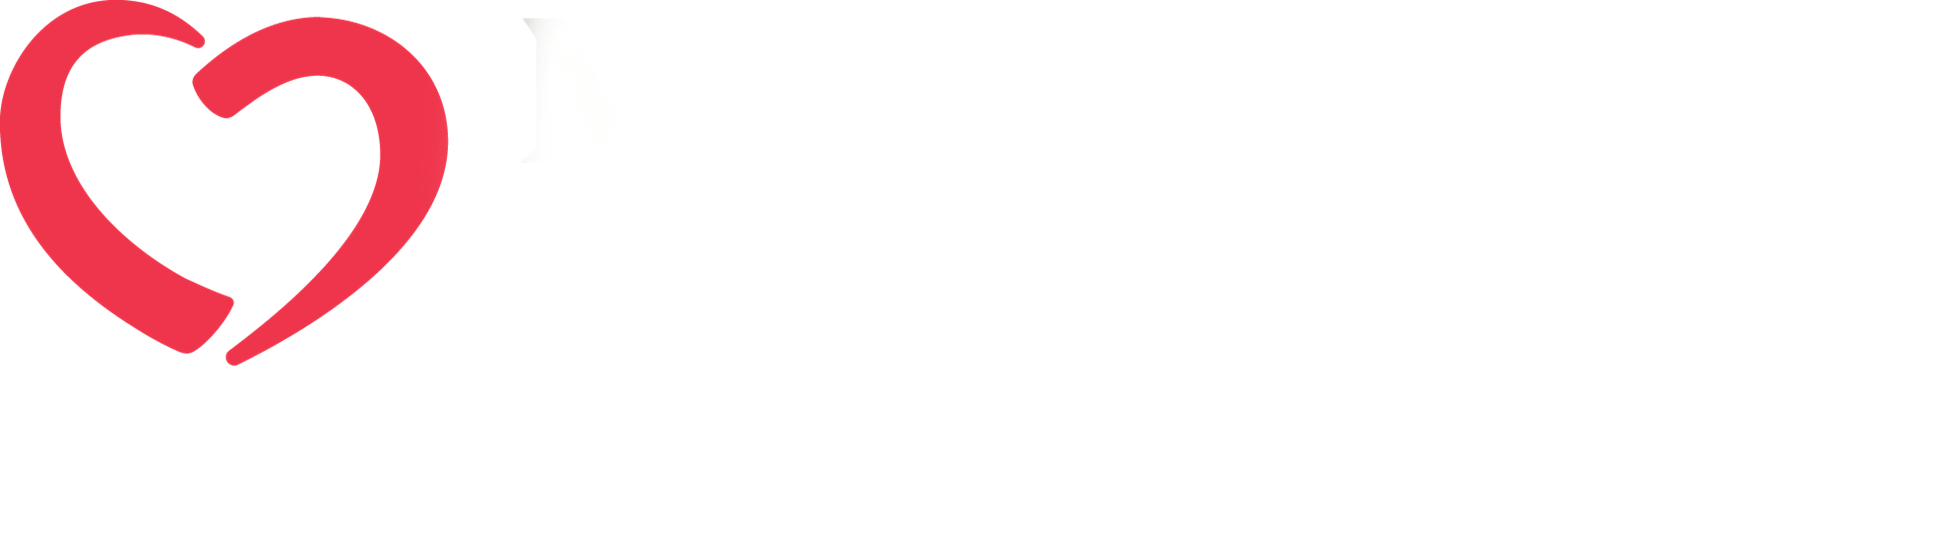 Momentous Institute Logo white version